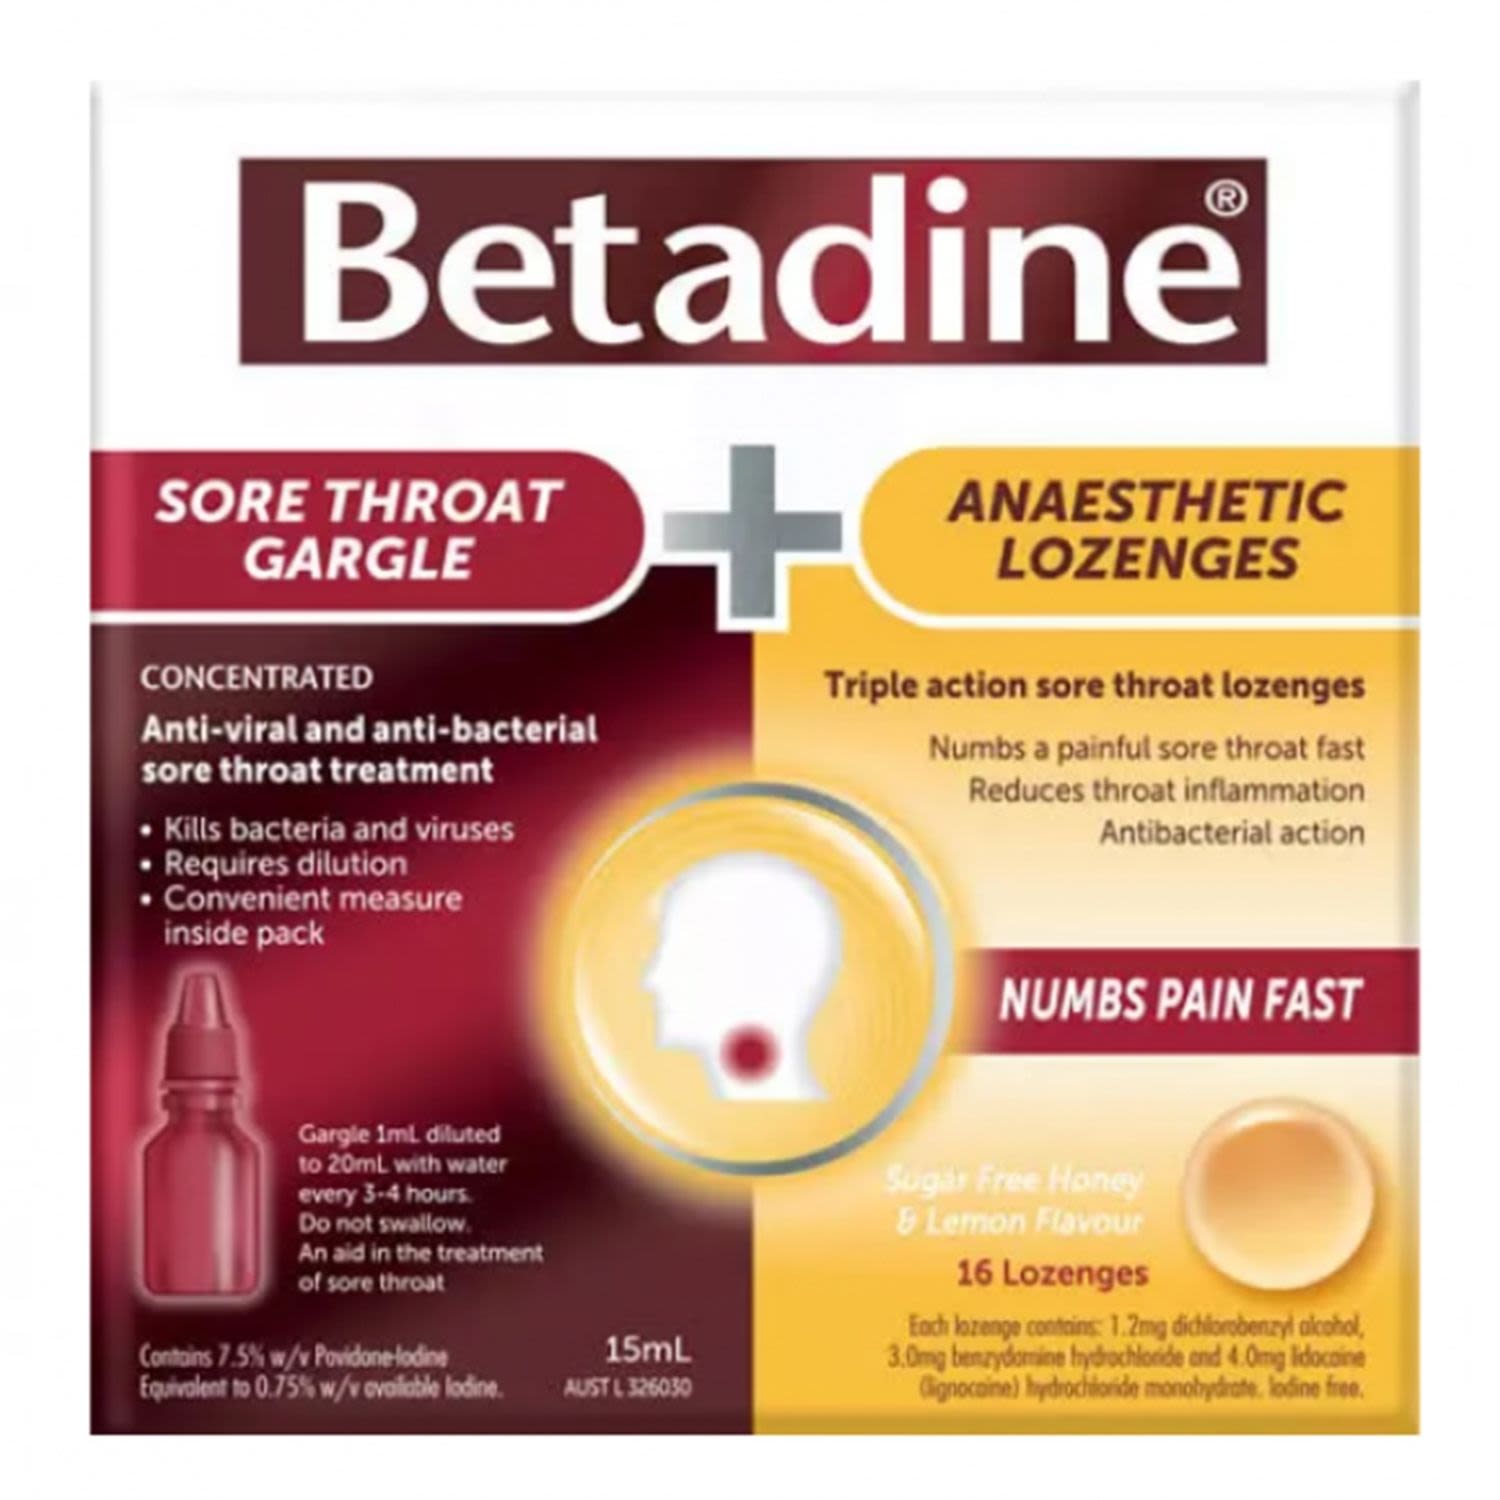 Betadine Sore Throat Gargle + Anaesthetic Lozenges Kit, 16 Each